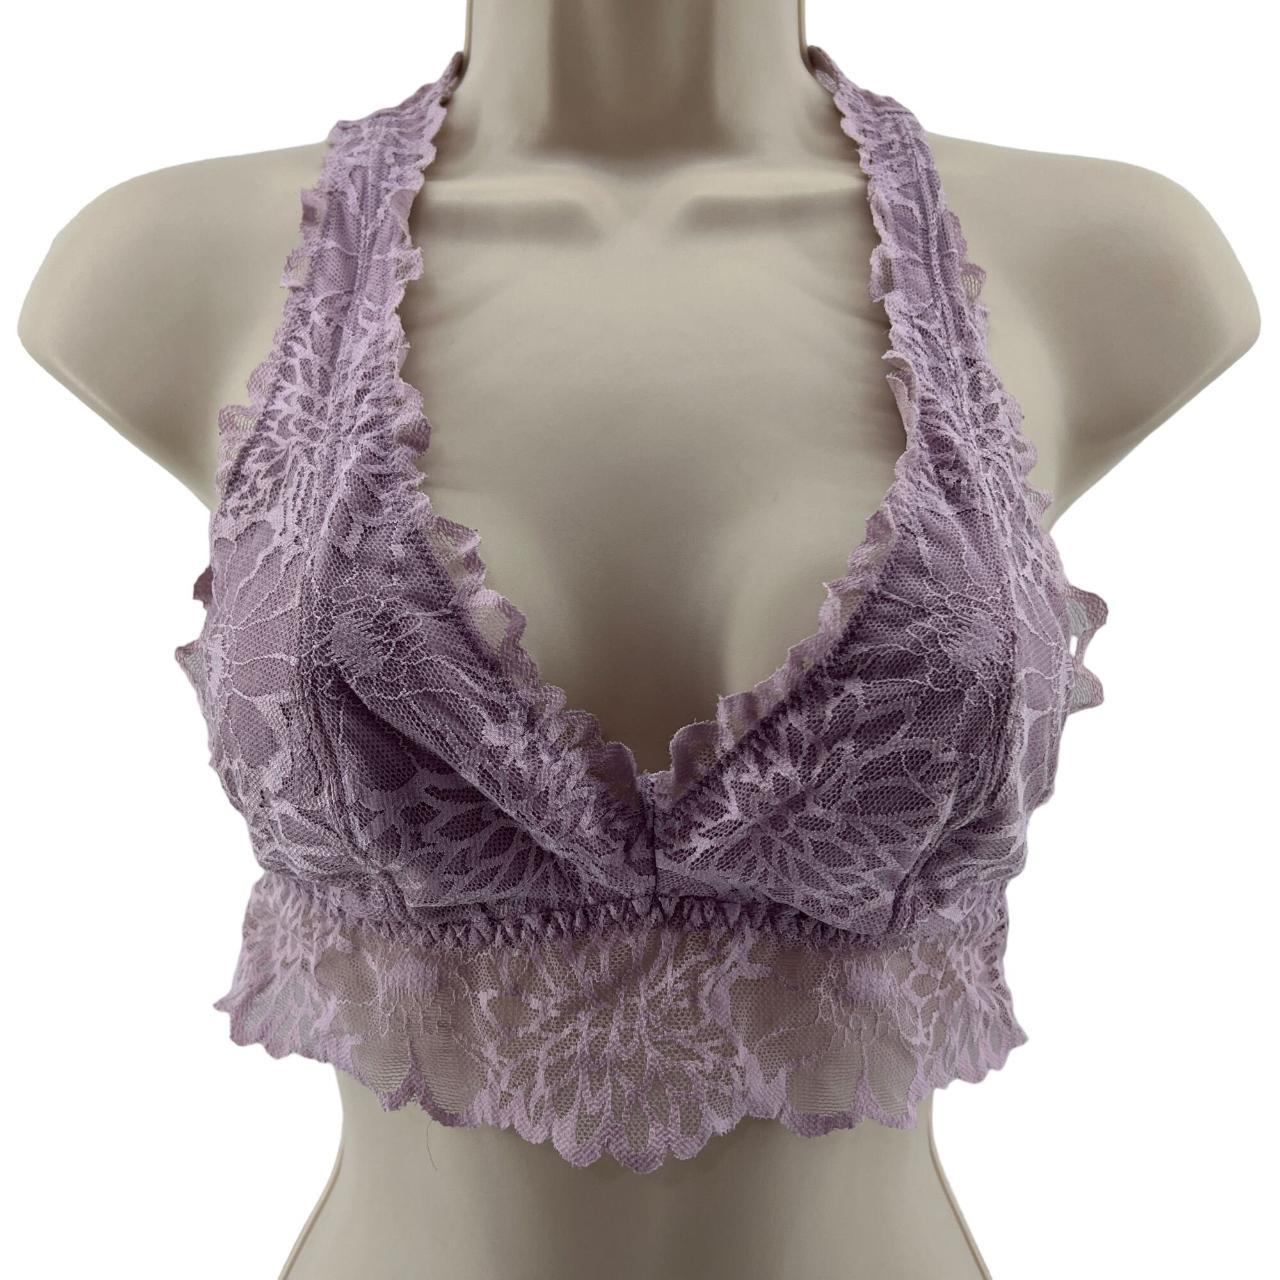 Victoria's Secret purple + pink lace bra💜🩷 💟the - Depop